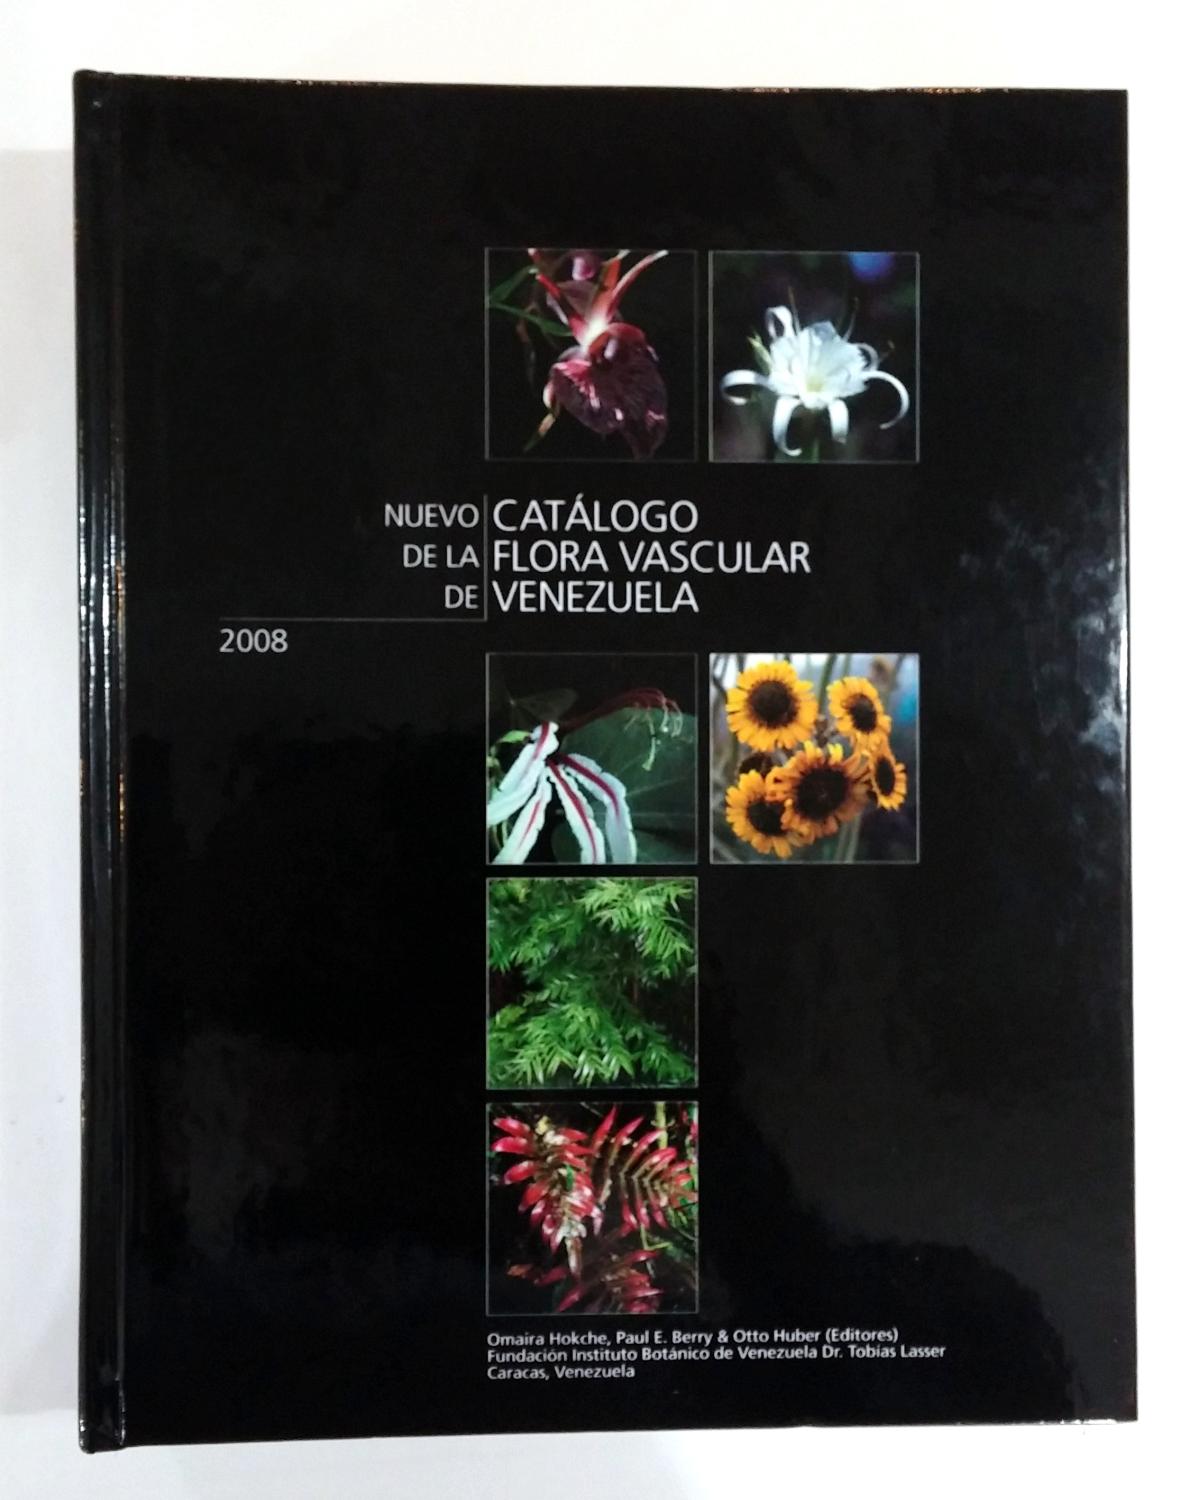 Nuevo Catálogo De La Flora Vascular De Venezuela - Omaira Hokche / Paul E. Berry et al